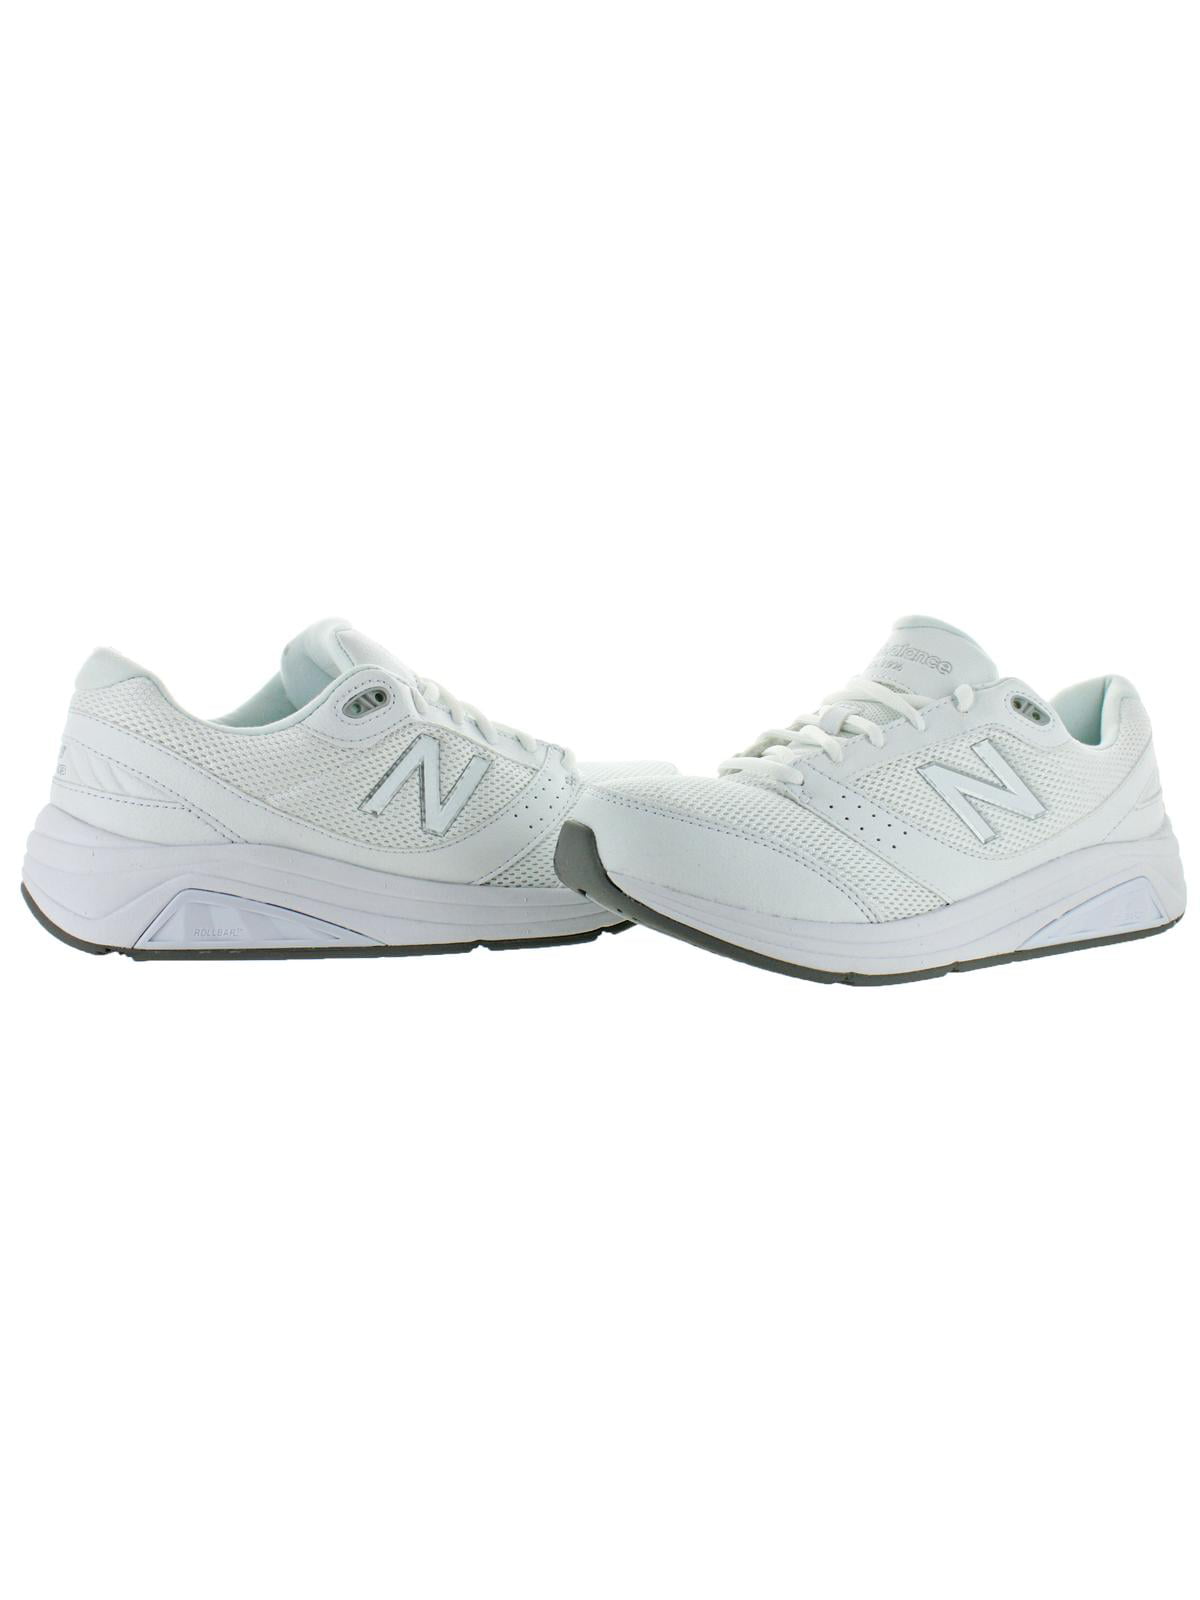 Buy New Balance Women's Ww928 Ws3 Ankle-High Leather Walking Shoe - 5W ...